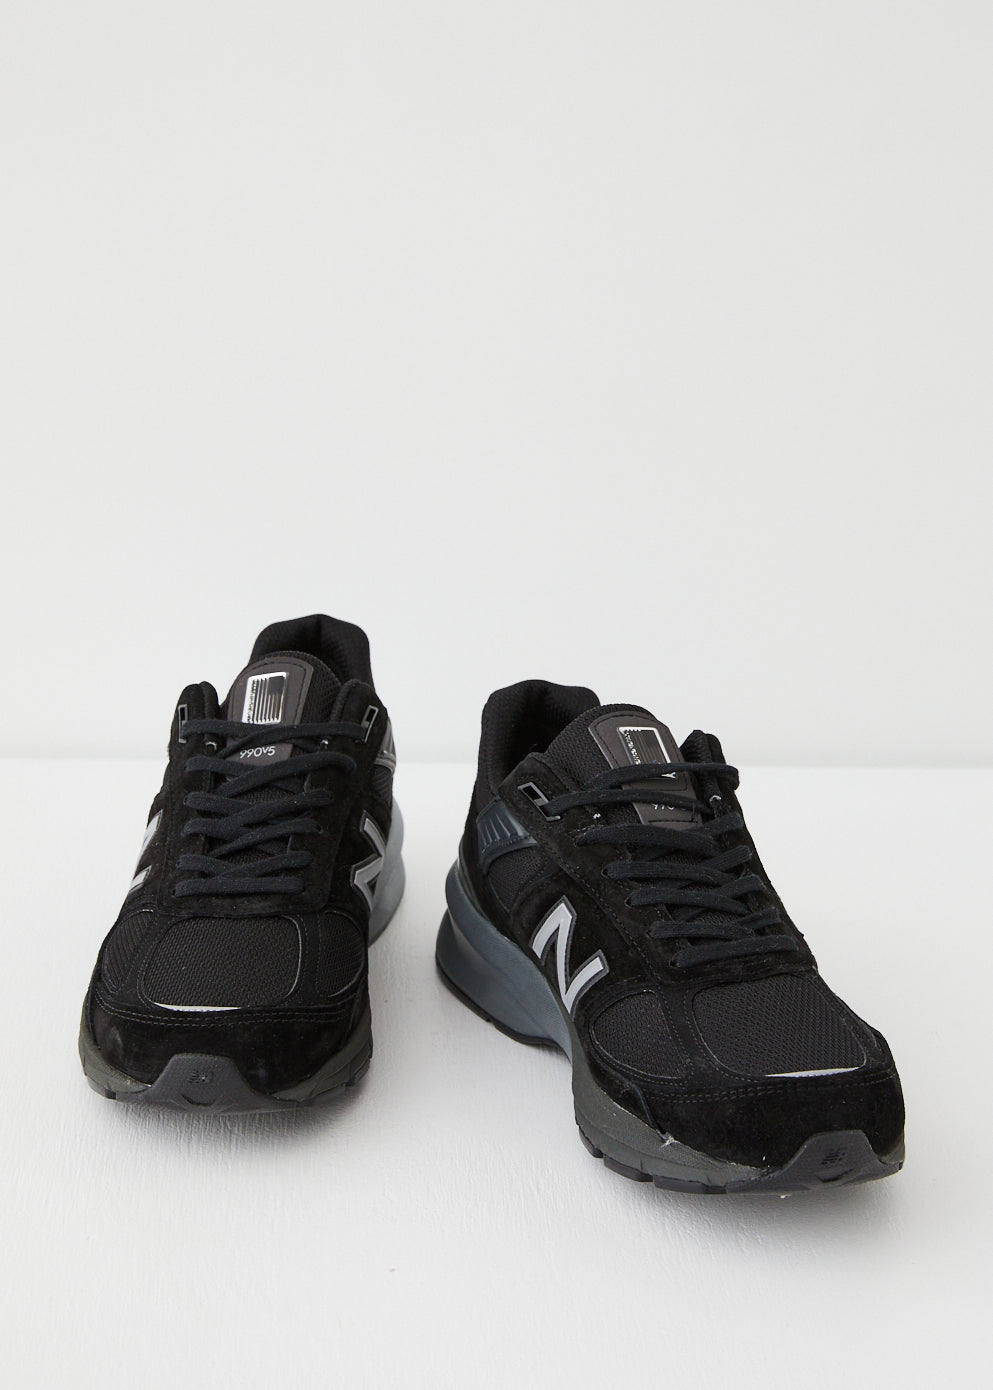 990V5 Sneakers